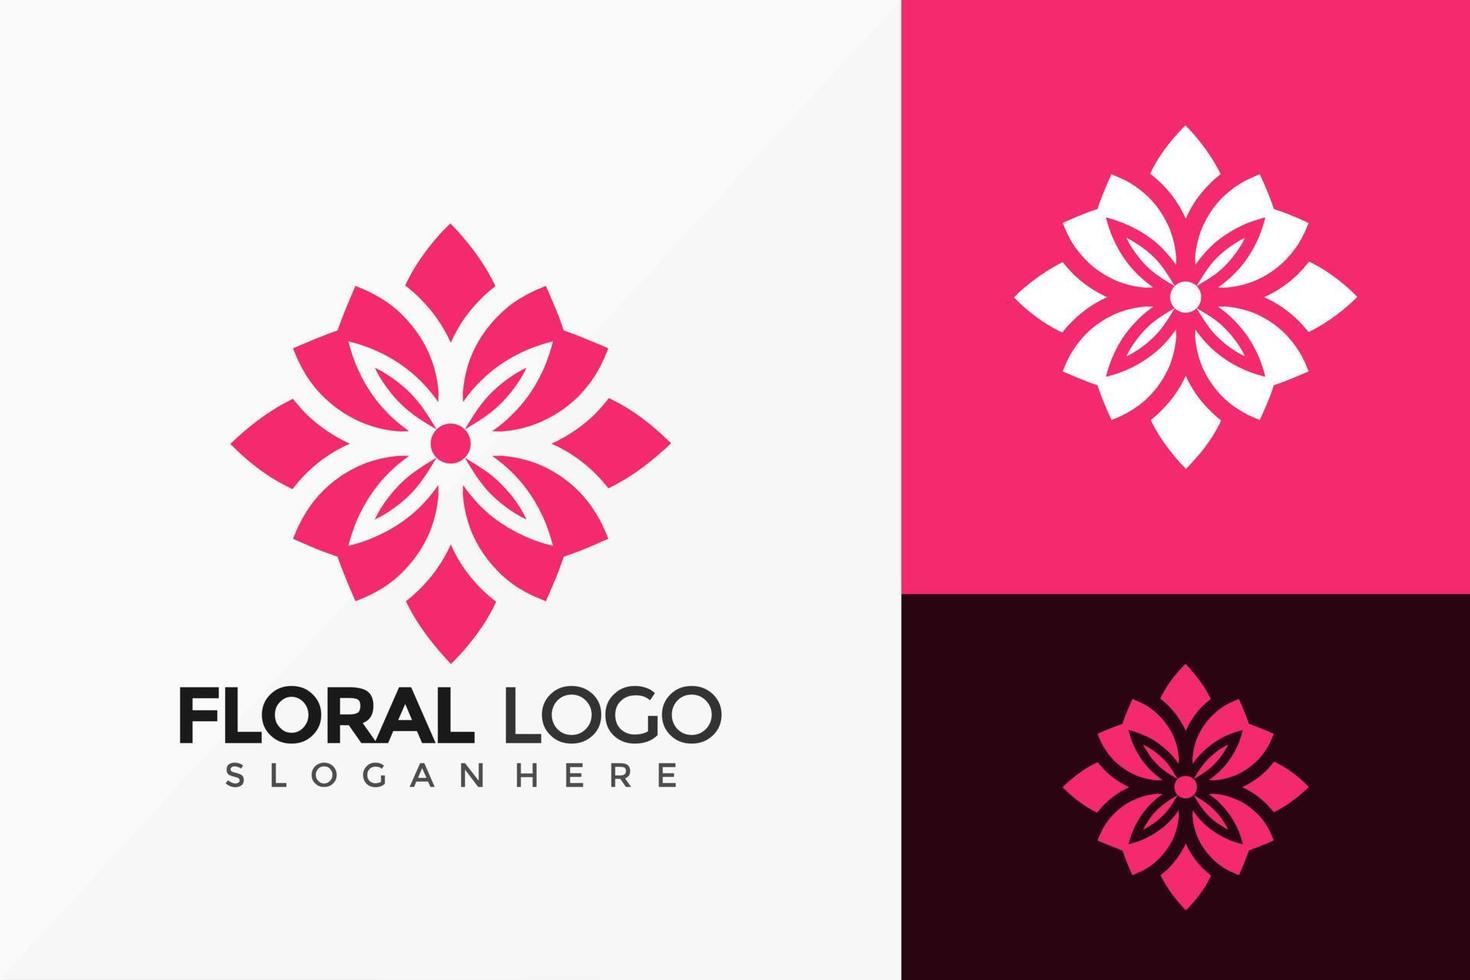 Floral Rose Creative Logo Design. Modern Idea logos designs Vector illustration template